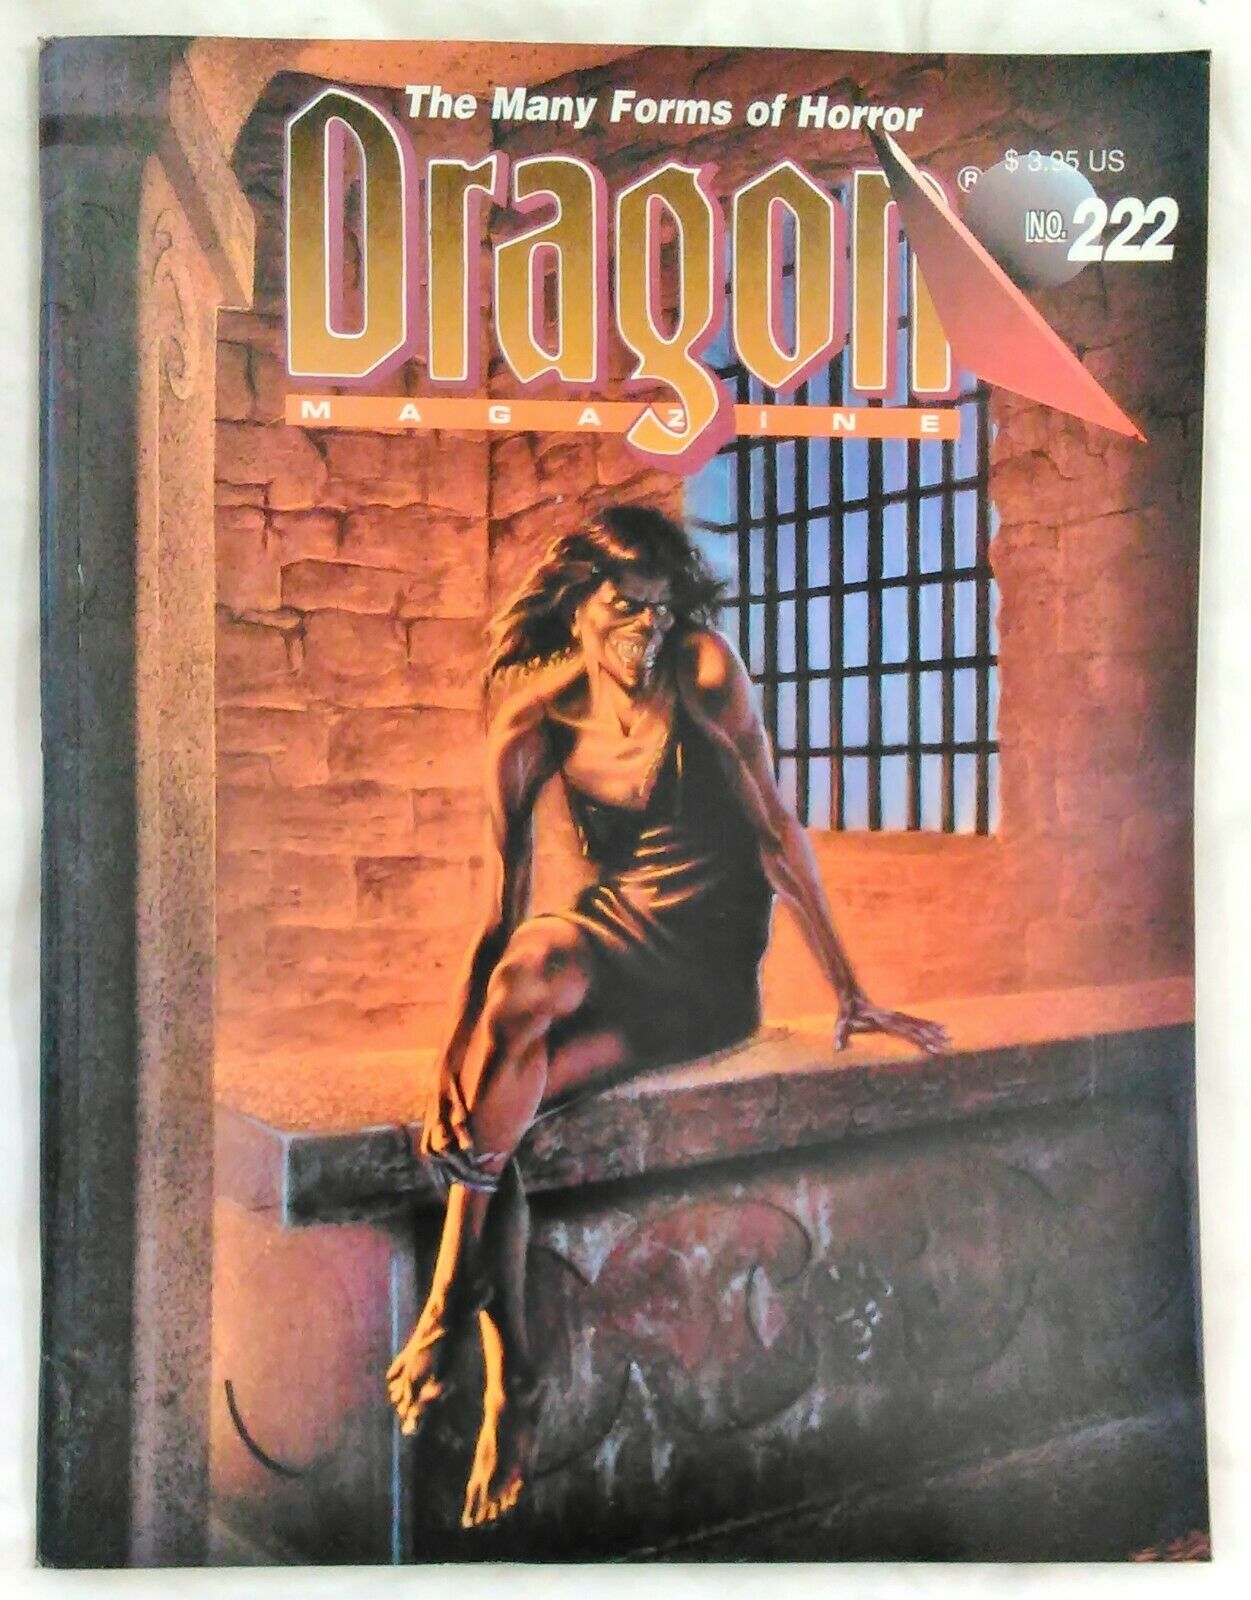 Tsr Dragon Magazine #222 Vol. Xx, No. 5 Oct 1995 - The Many Forms Of Horror